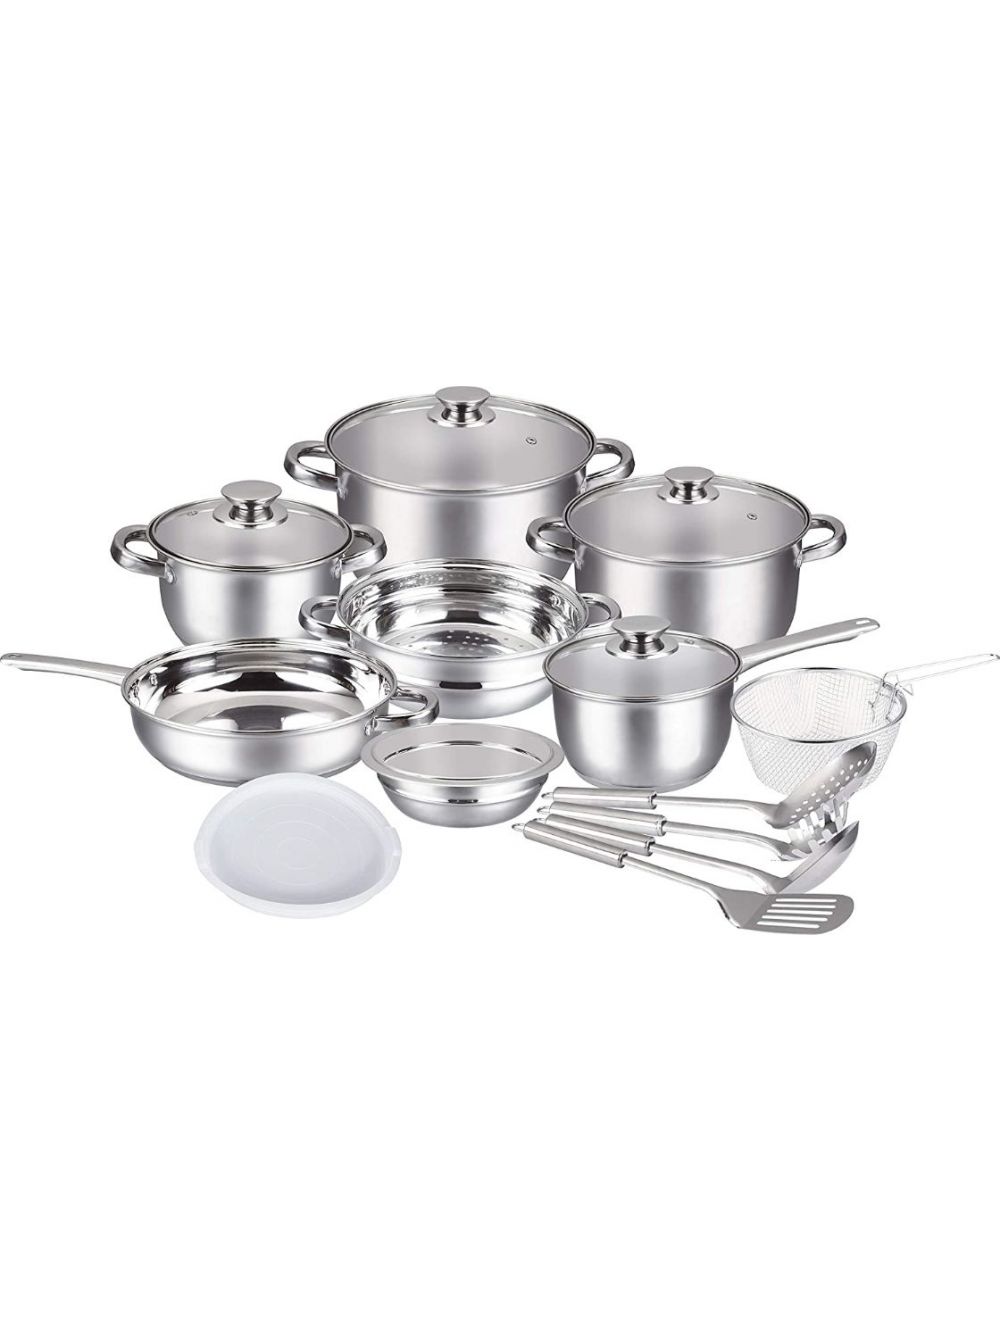 Insiya 17-piece Stainless Steel Premium Cookware Set-SV15